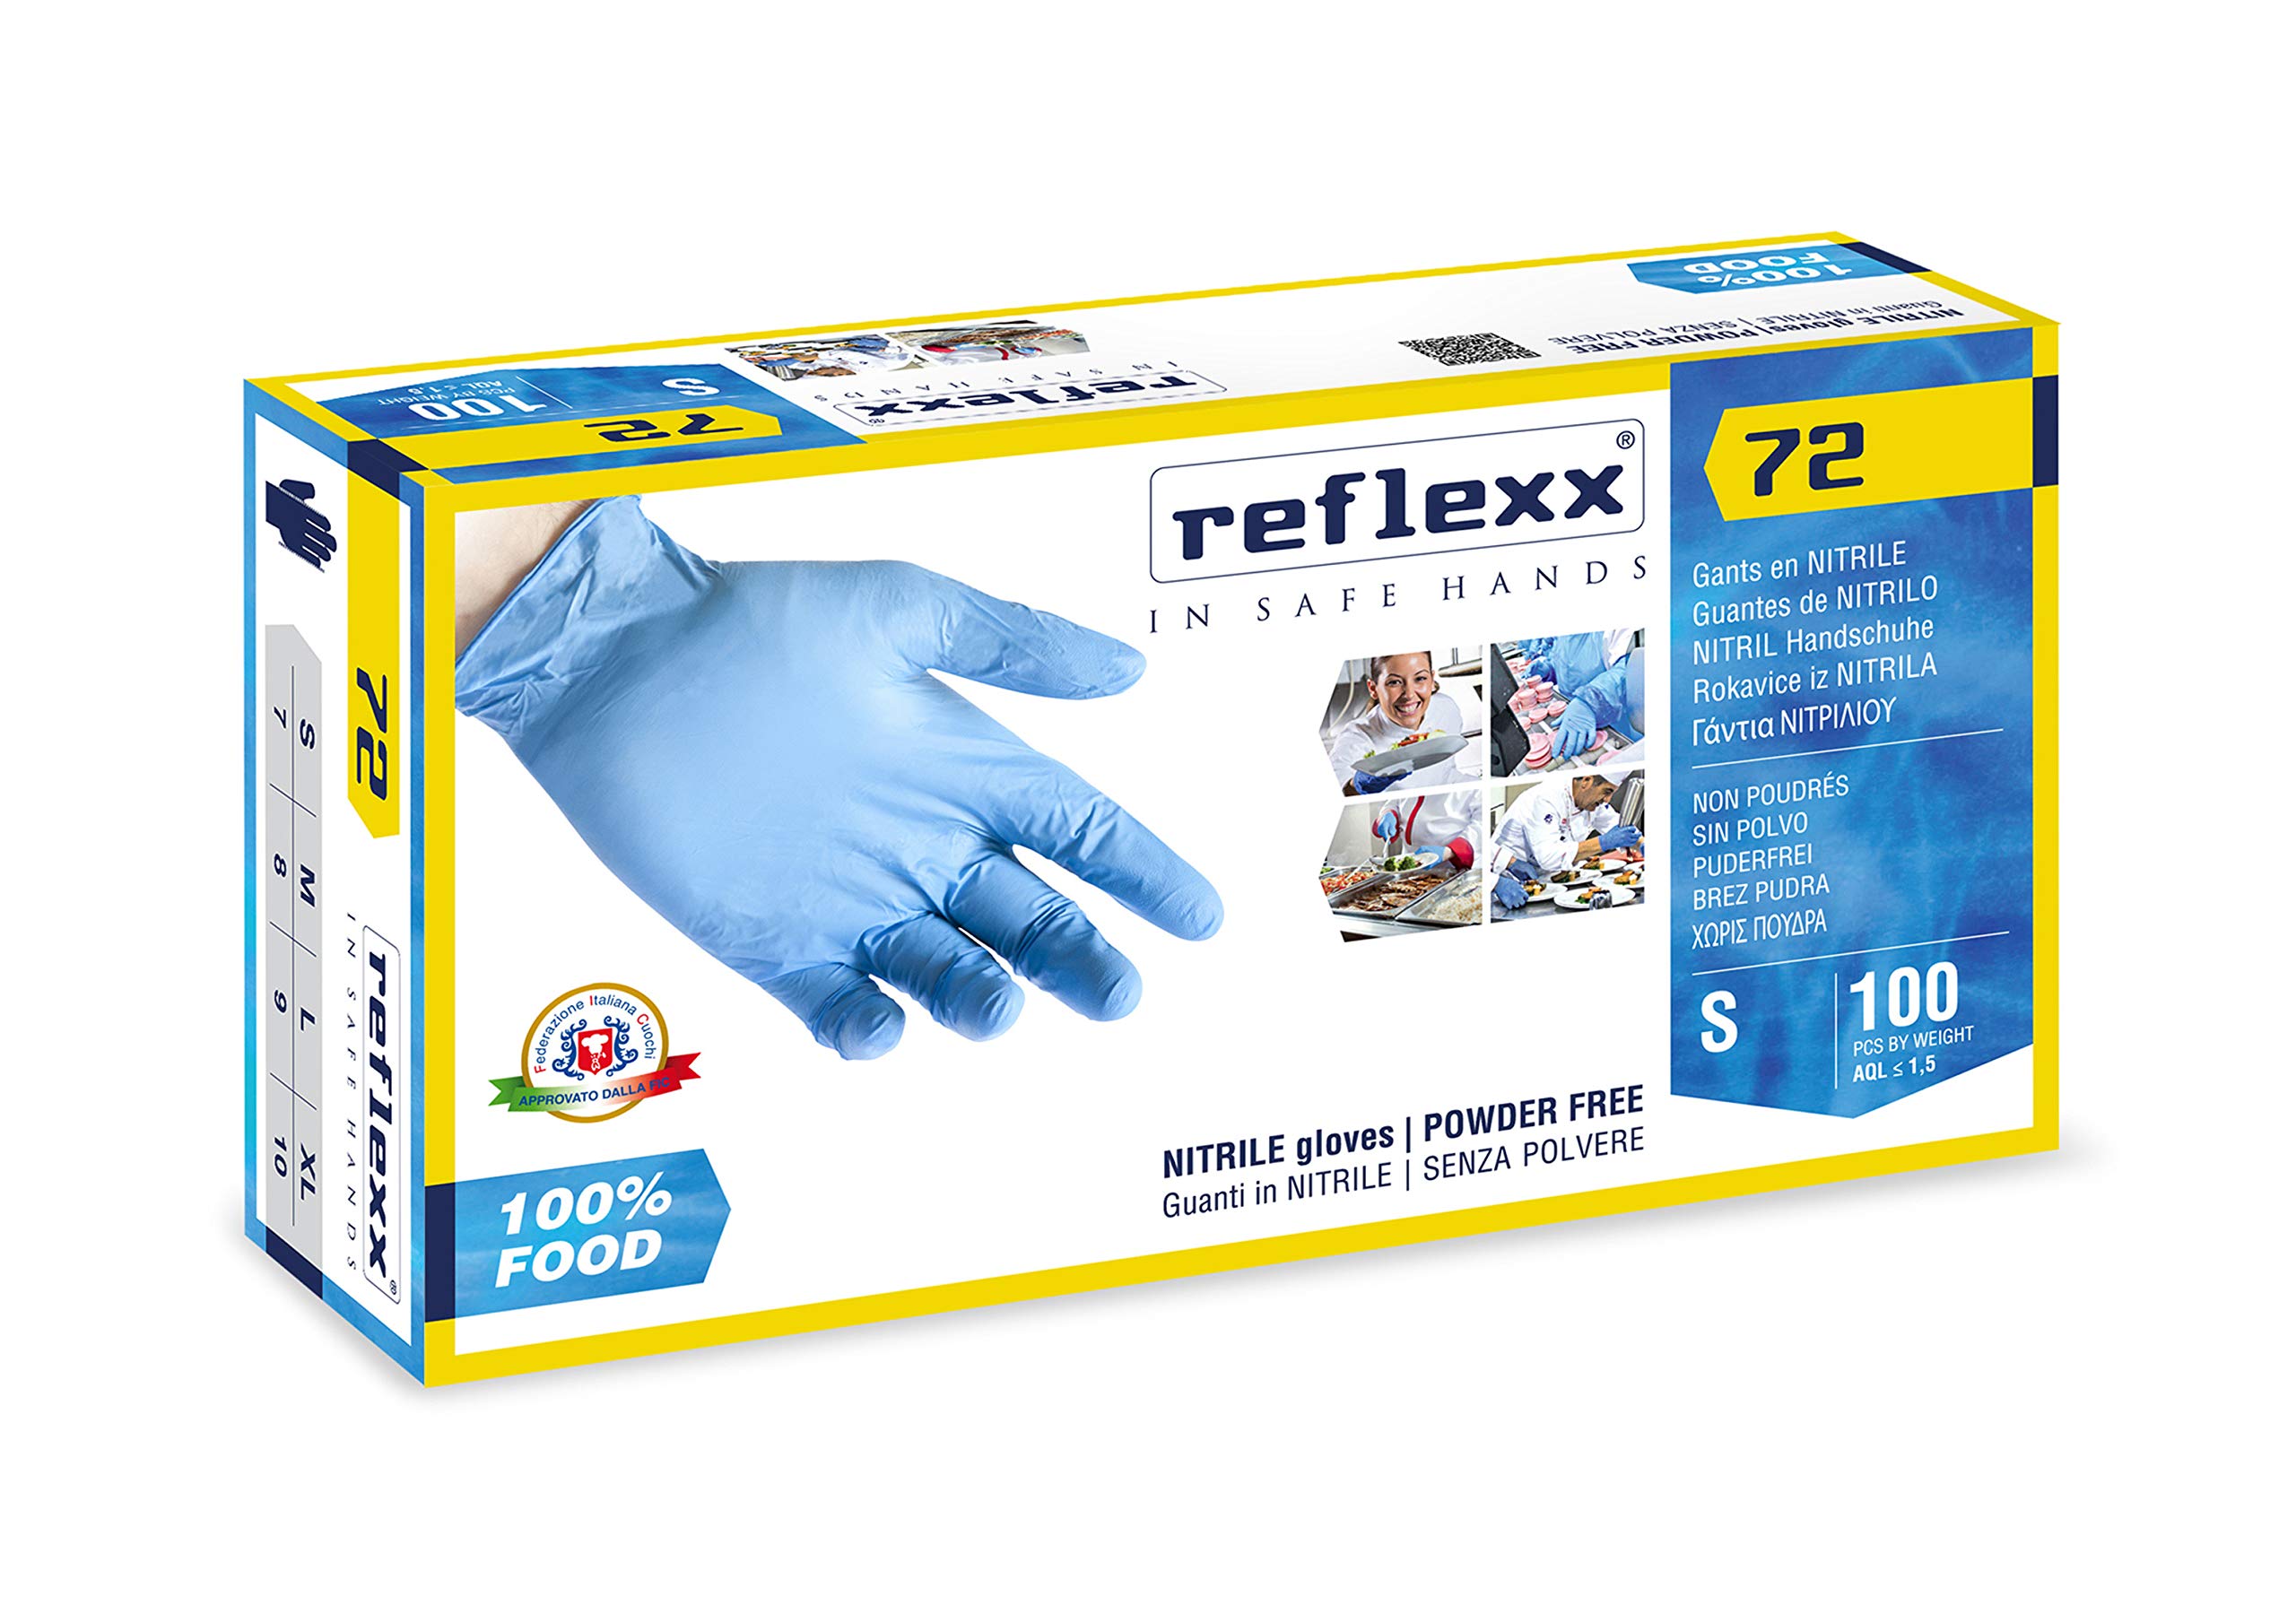 Guanti in nitrile foodline R72 - tg L - azzurro - Reflexx - conf. 100 pezzi